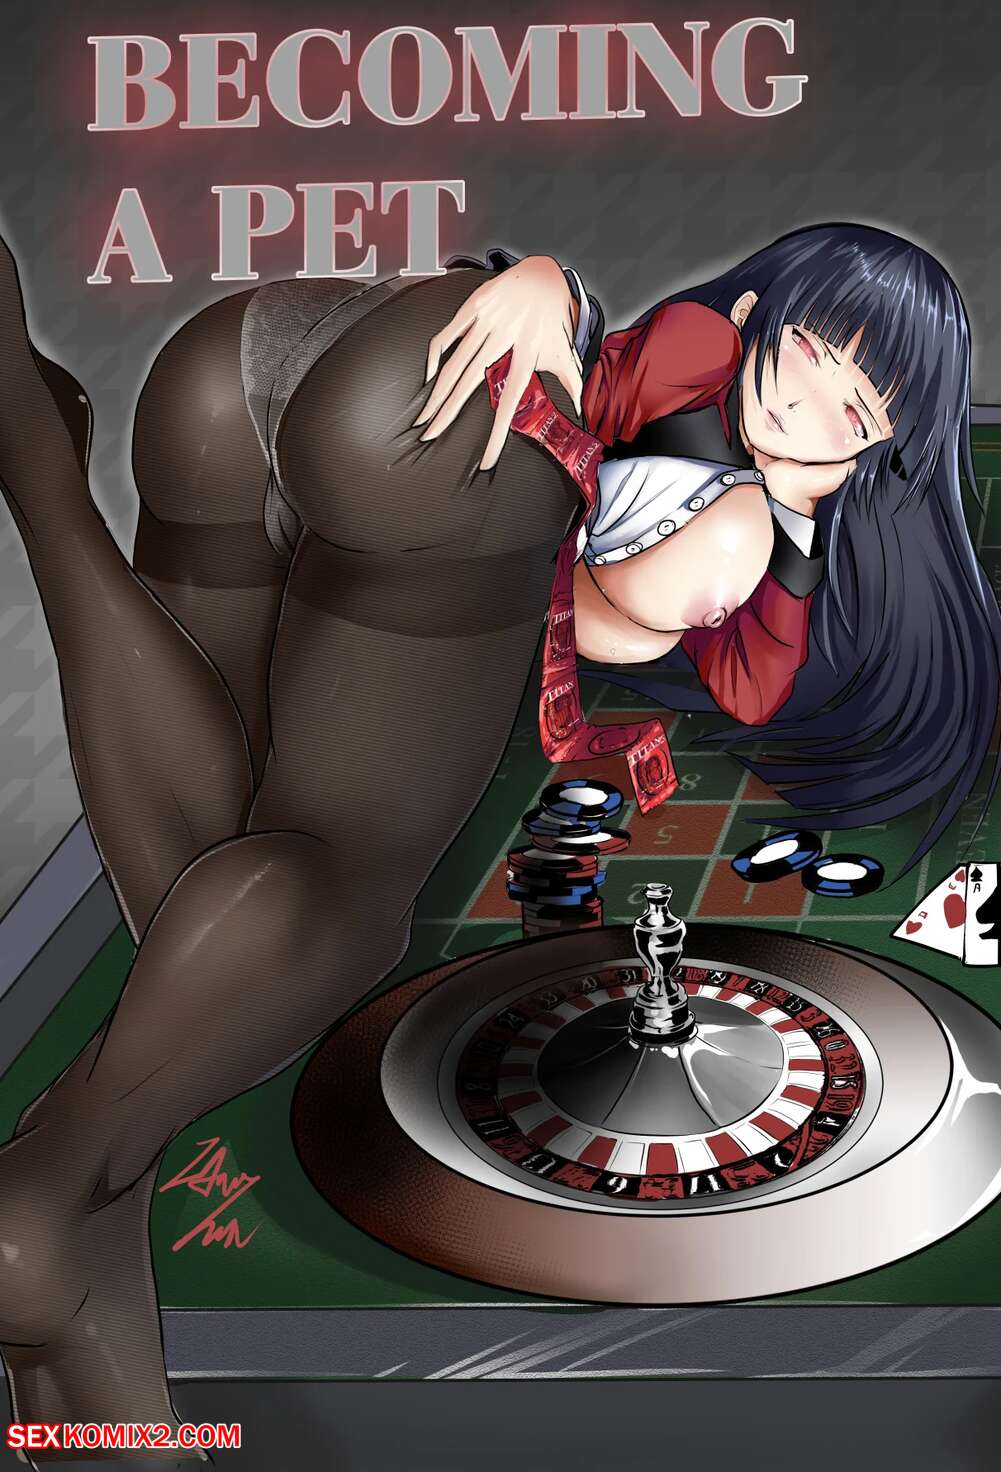 Yumeko porn comics